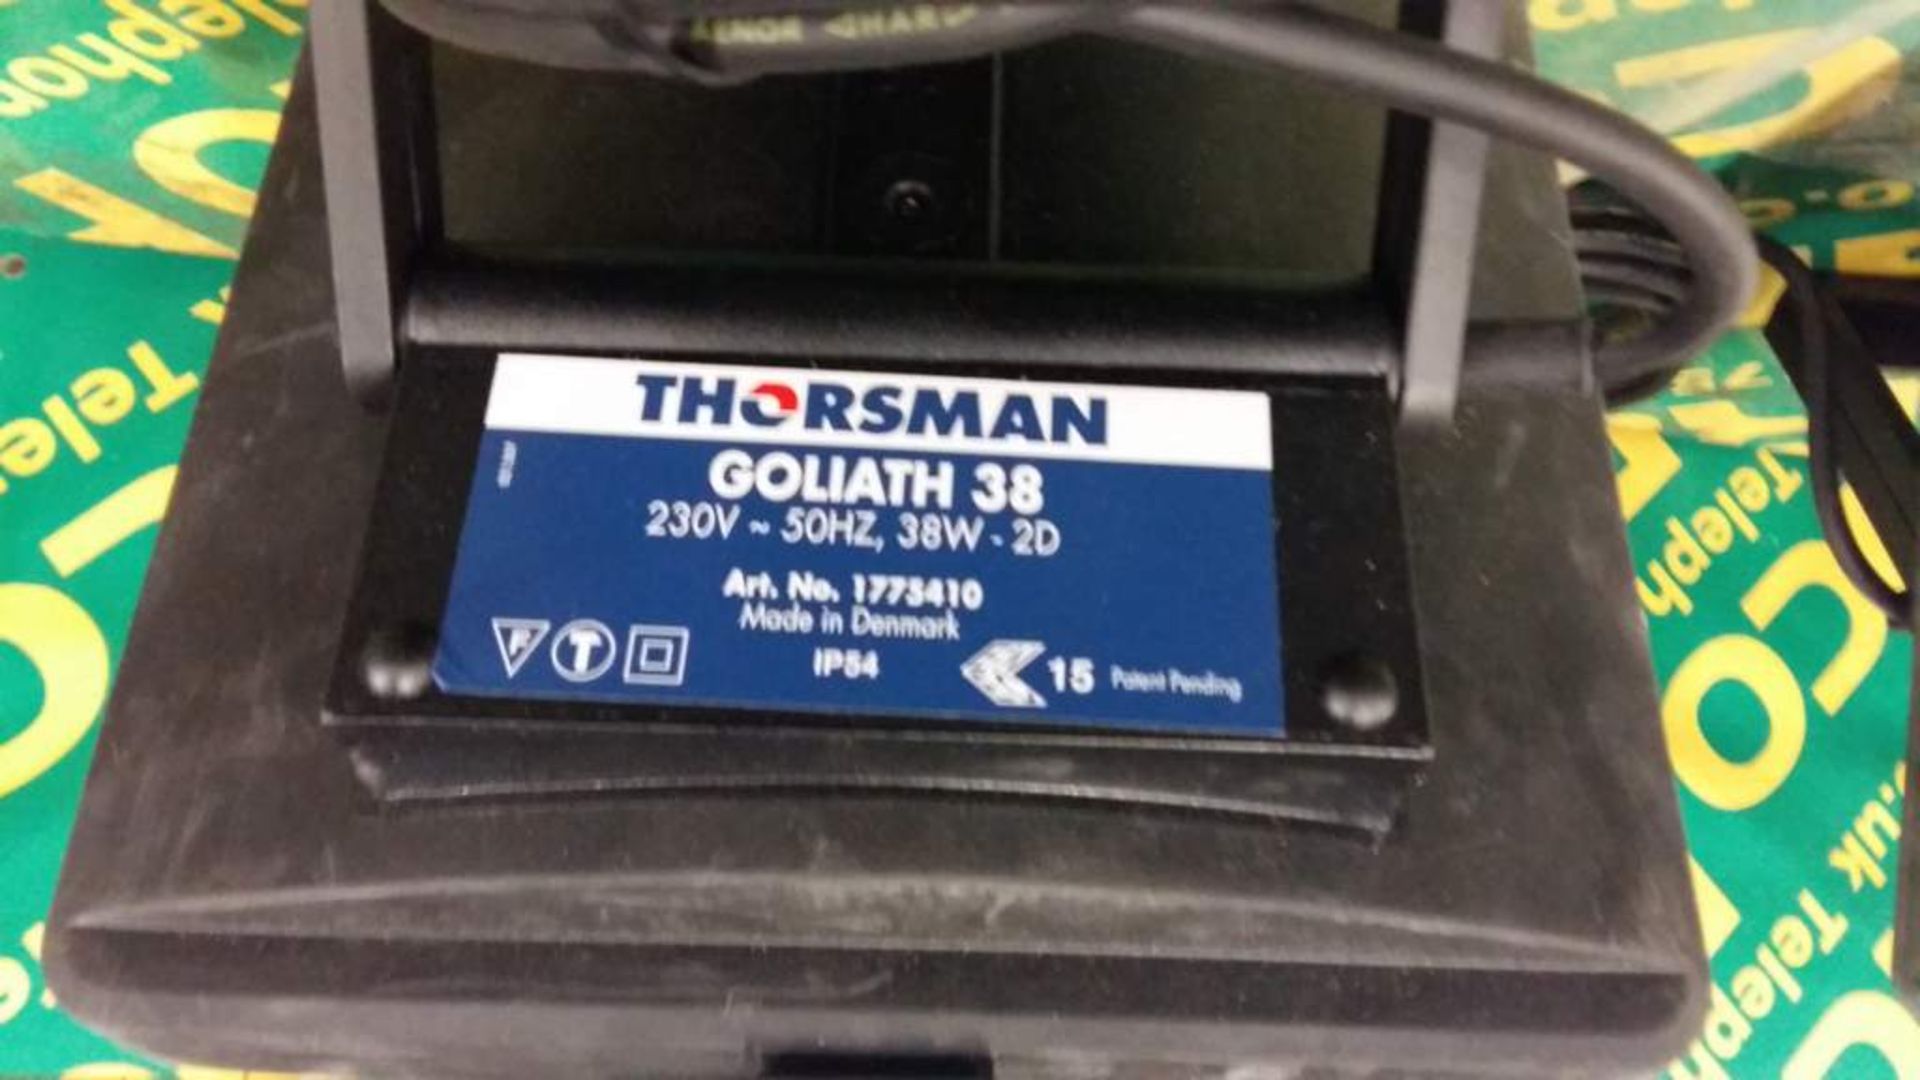 Thorsman goliath 38 portable floodlight 230v - Image 2 of 2